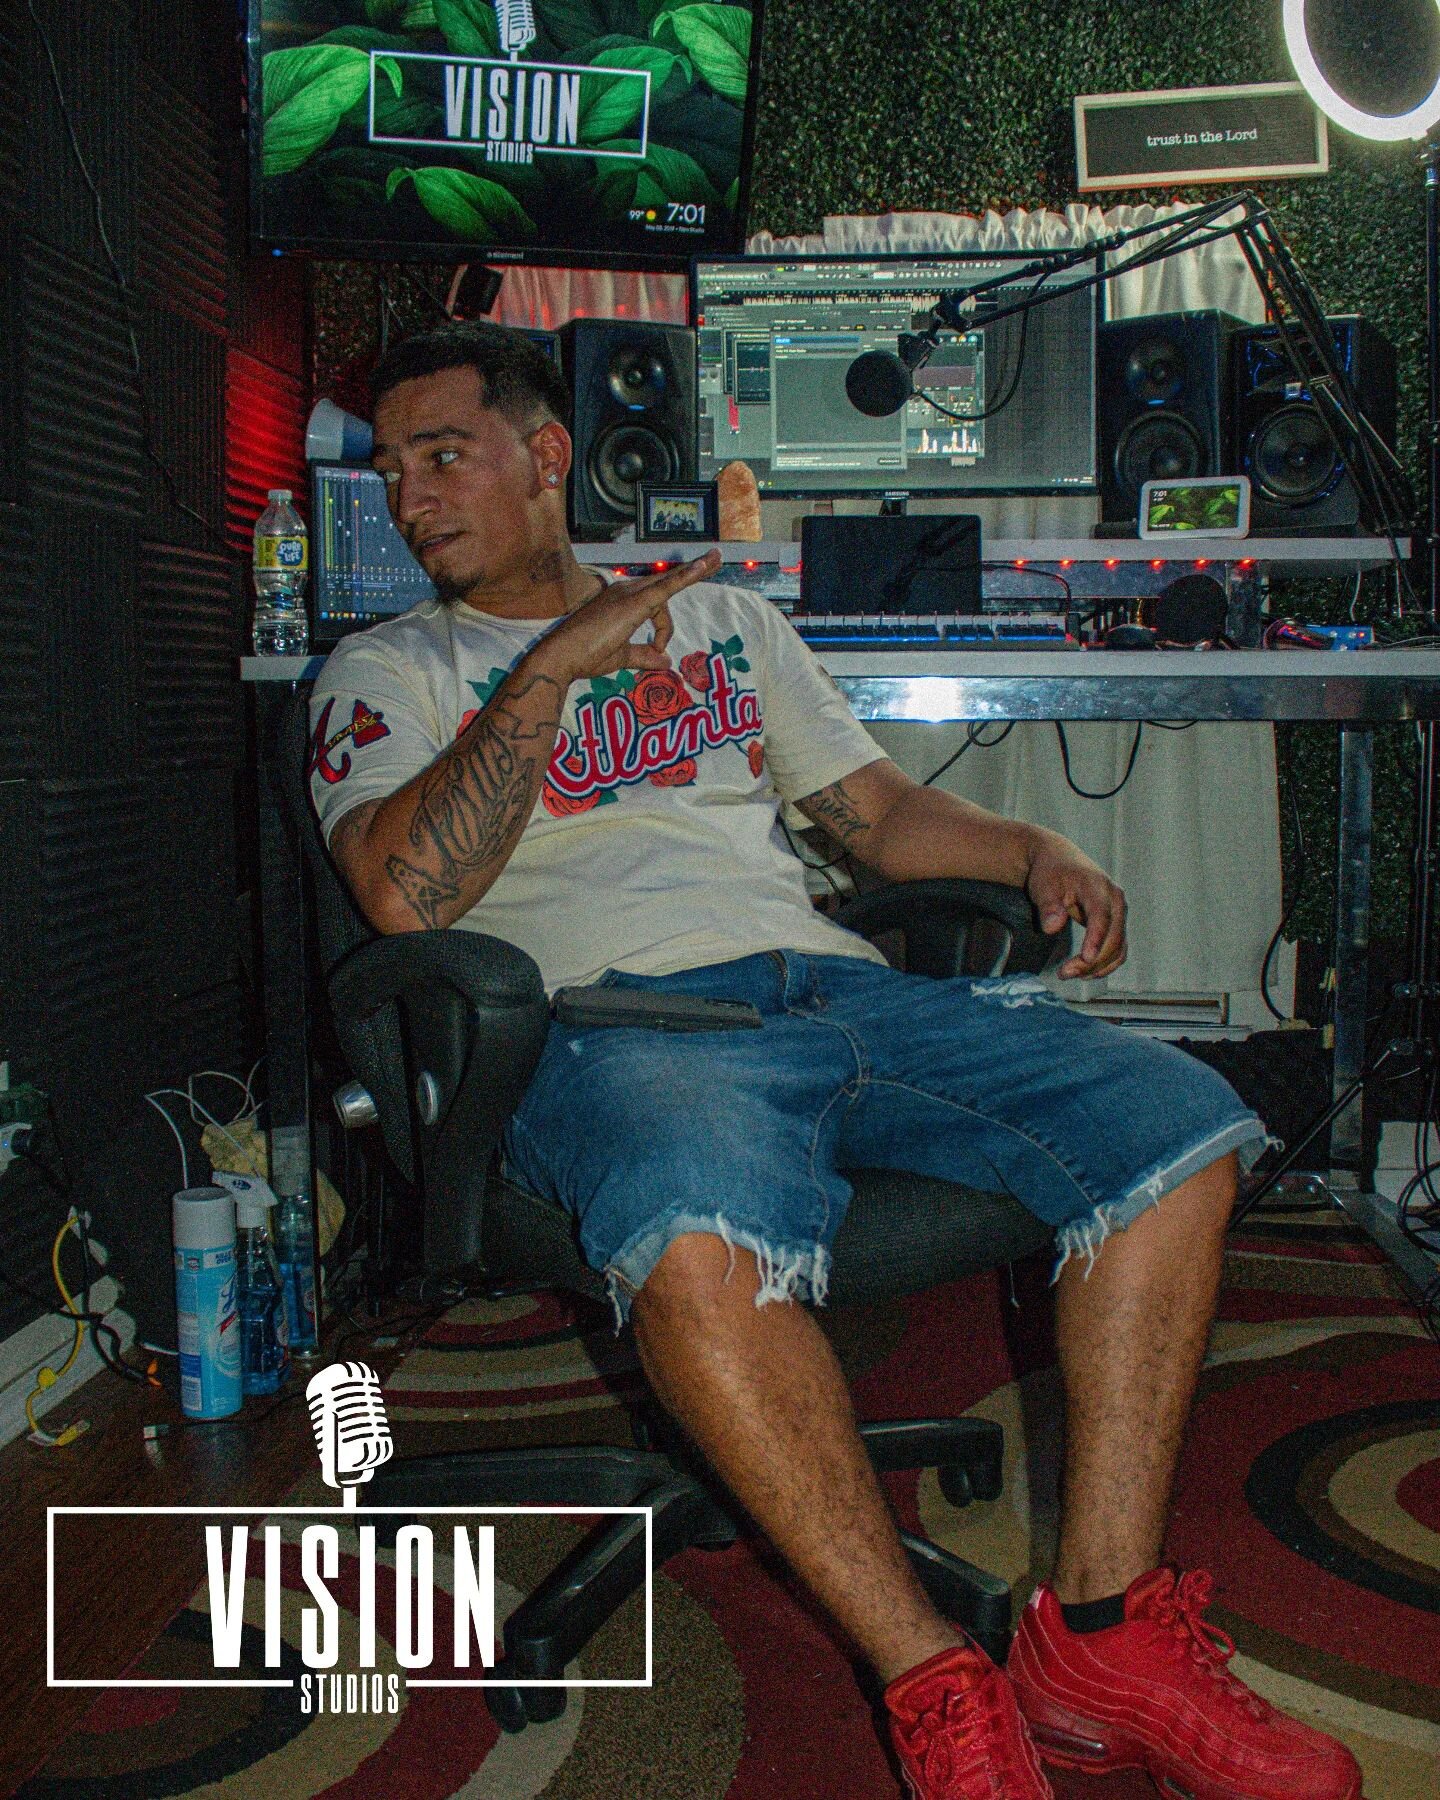 New music from @junkytrill coming soon🔥 🌿
&bull;
&bull;
&bull;
#studio #visionstudios #music #bcs #aggieland #collegestation #texas #houston #rapper #artist #explore #viral #downtownbryan #tx #rap #hiphop #rnb #singer #visionary #visionarymedia